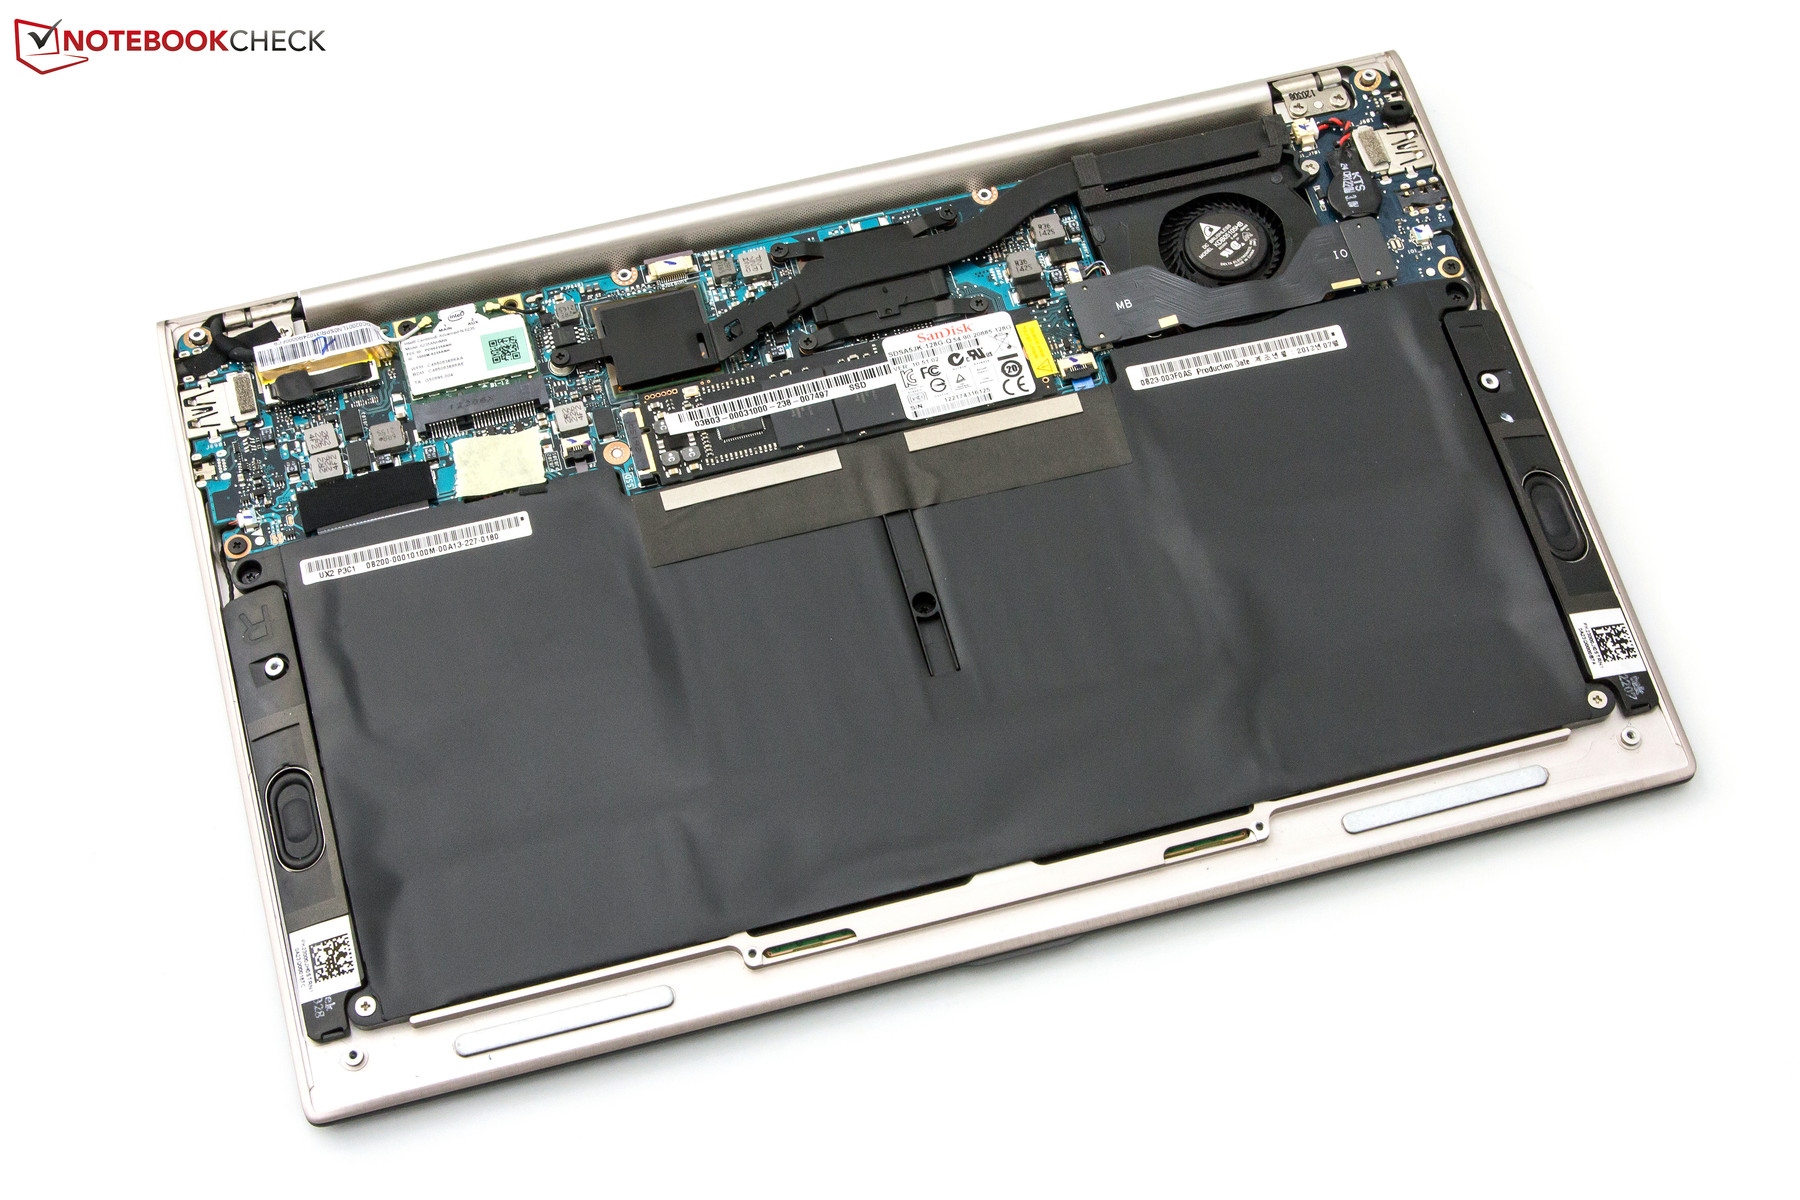 Review Asus Zenbook Prime UX21A Ultrabook - NotebookCheck.net Reviews